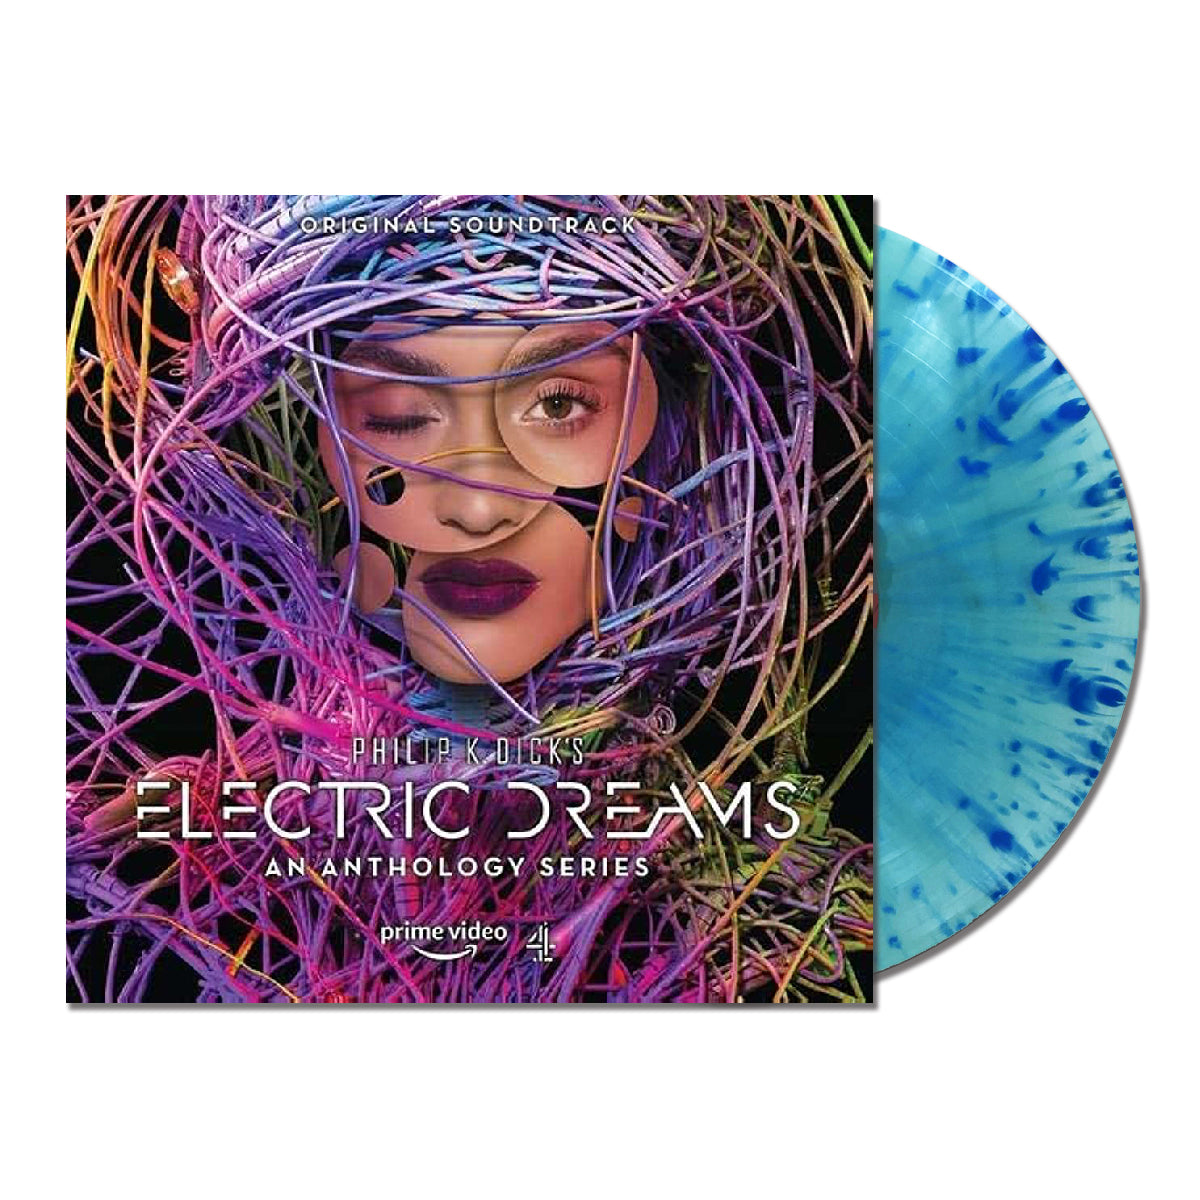 Philip K. Dick's Electric Dreams: An Anthology Series (Original Soundtrack) — Original Soundtrack for the Prime Video Series